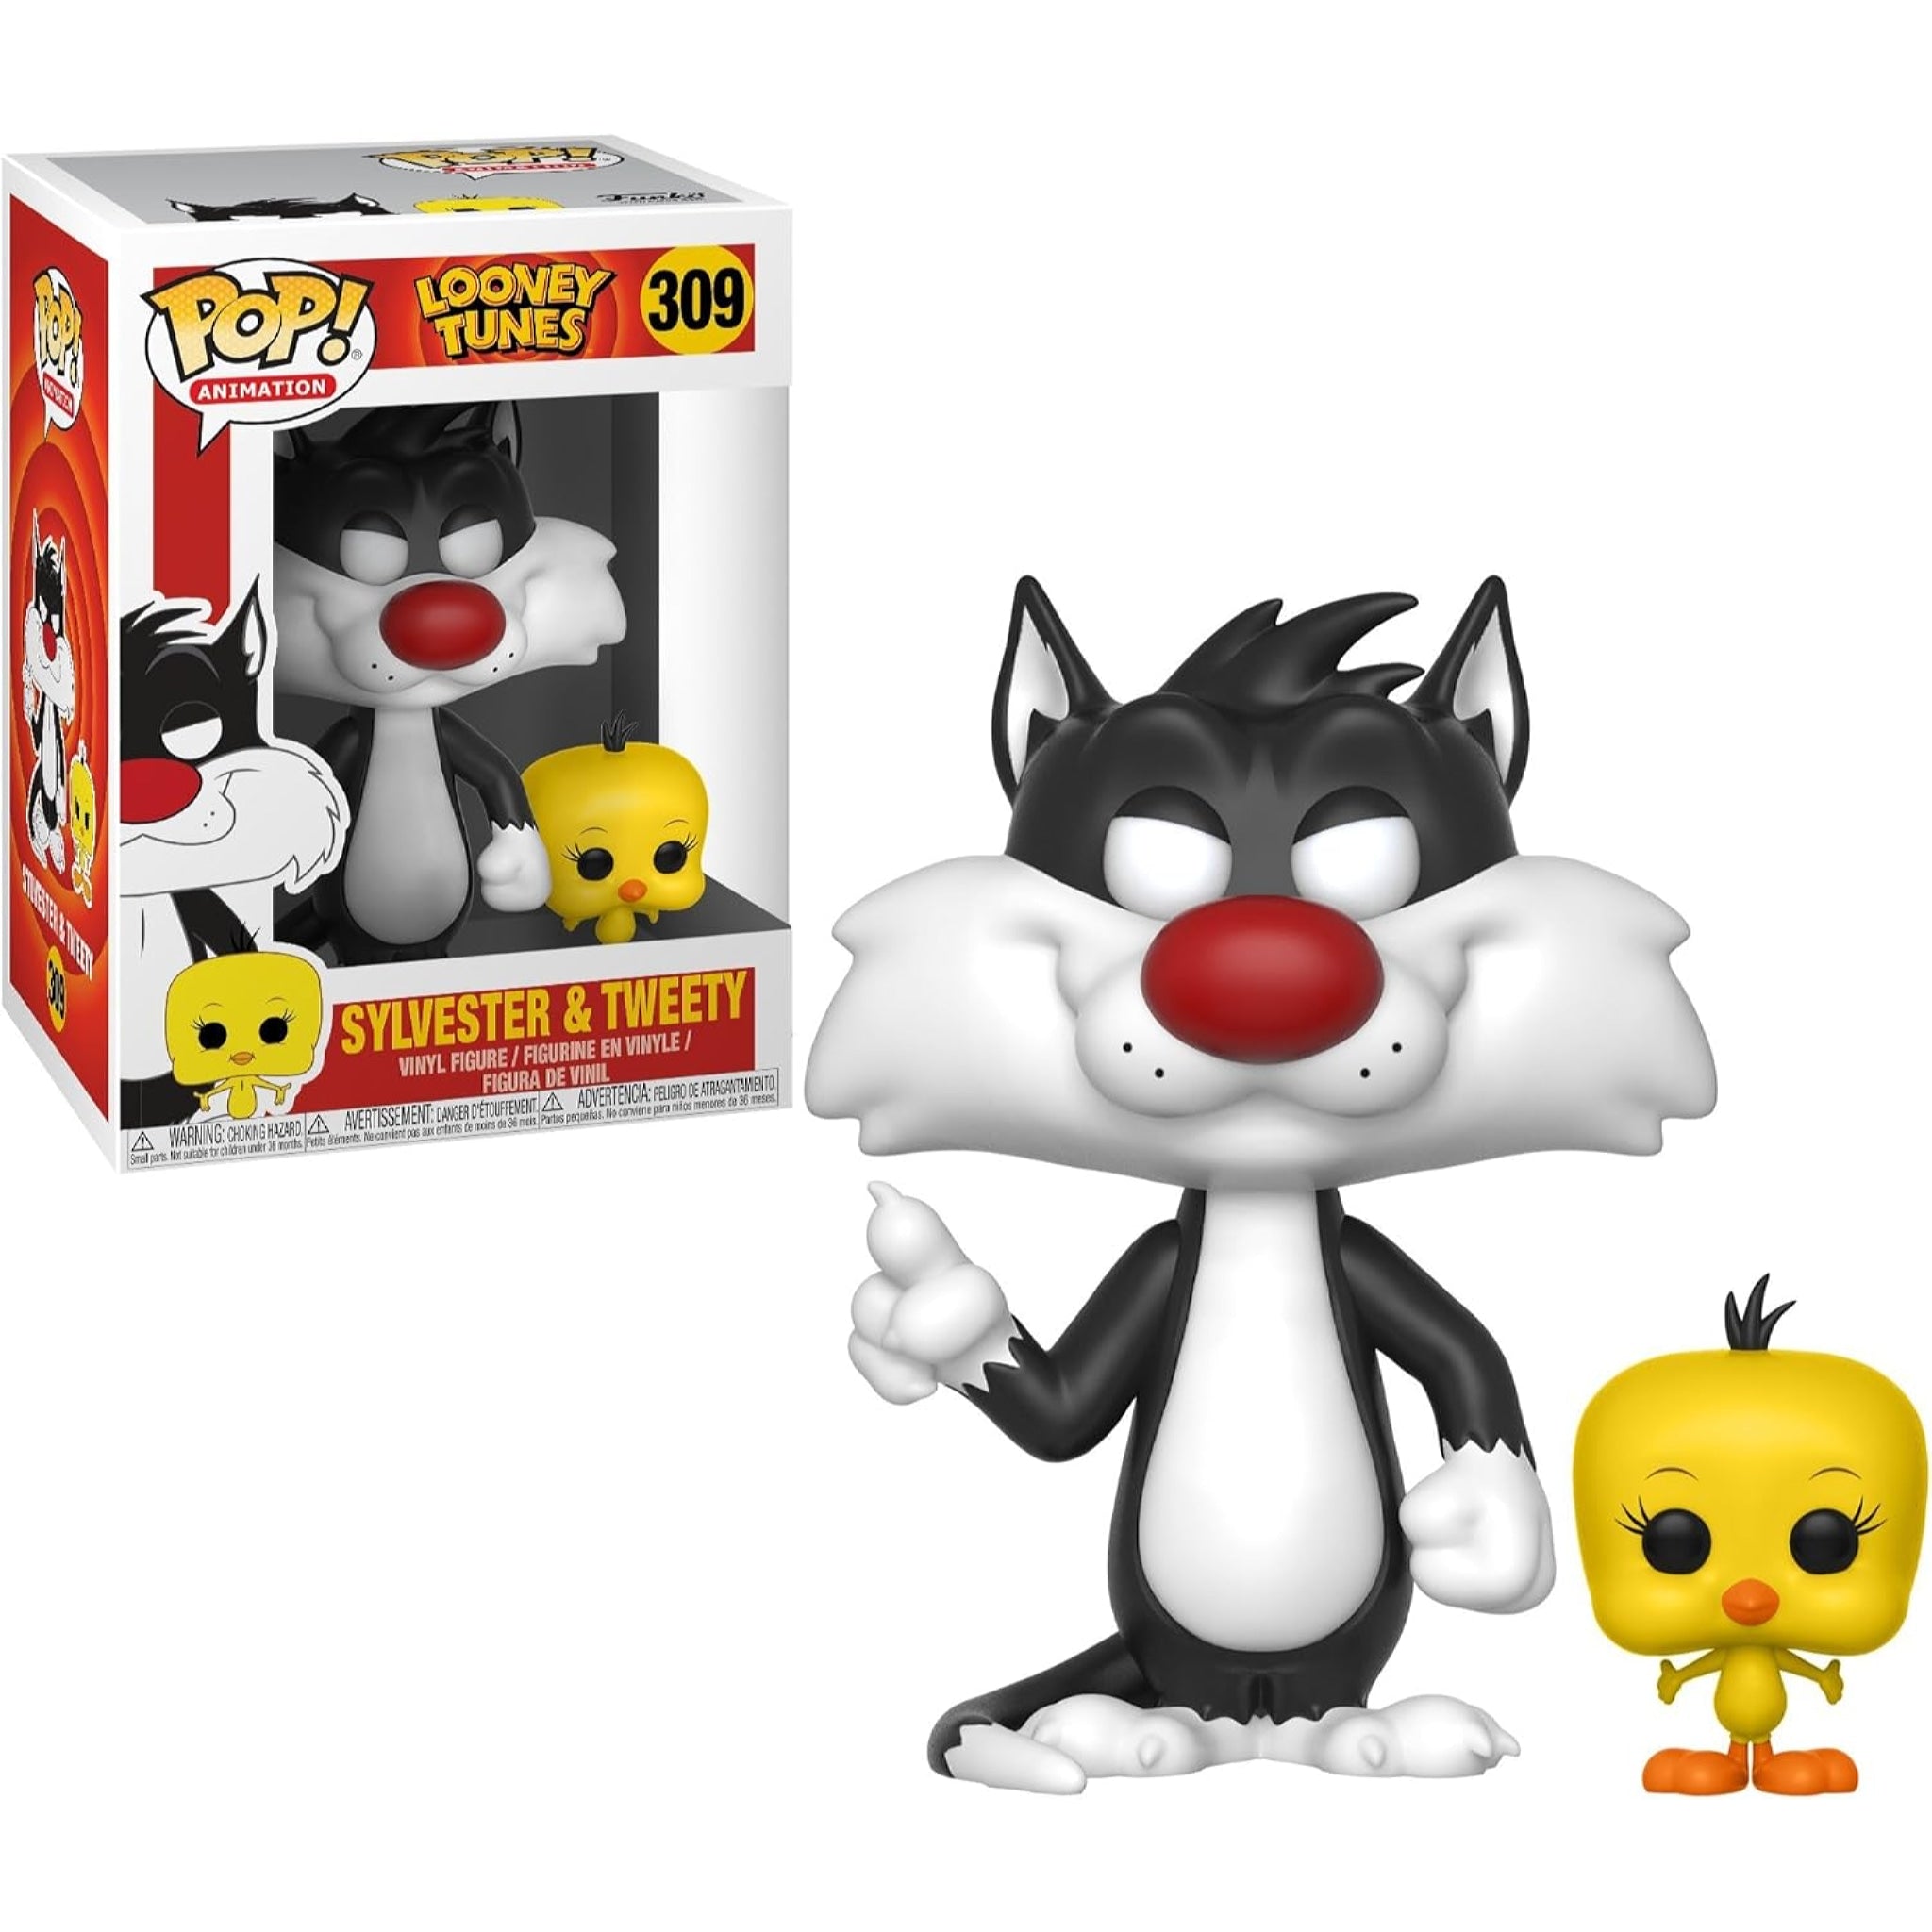 Looney Tunes Sylvester Cat & Tweety Funko Pop! Animation Vinyl Figures 309 DAMAGED BOX